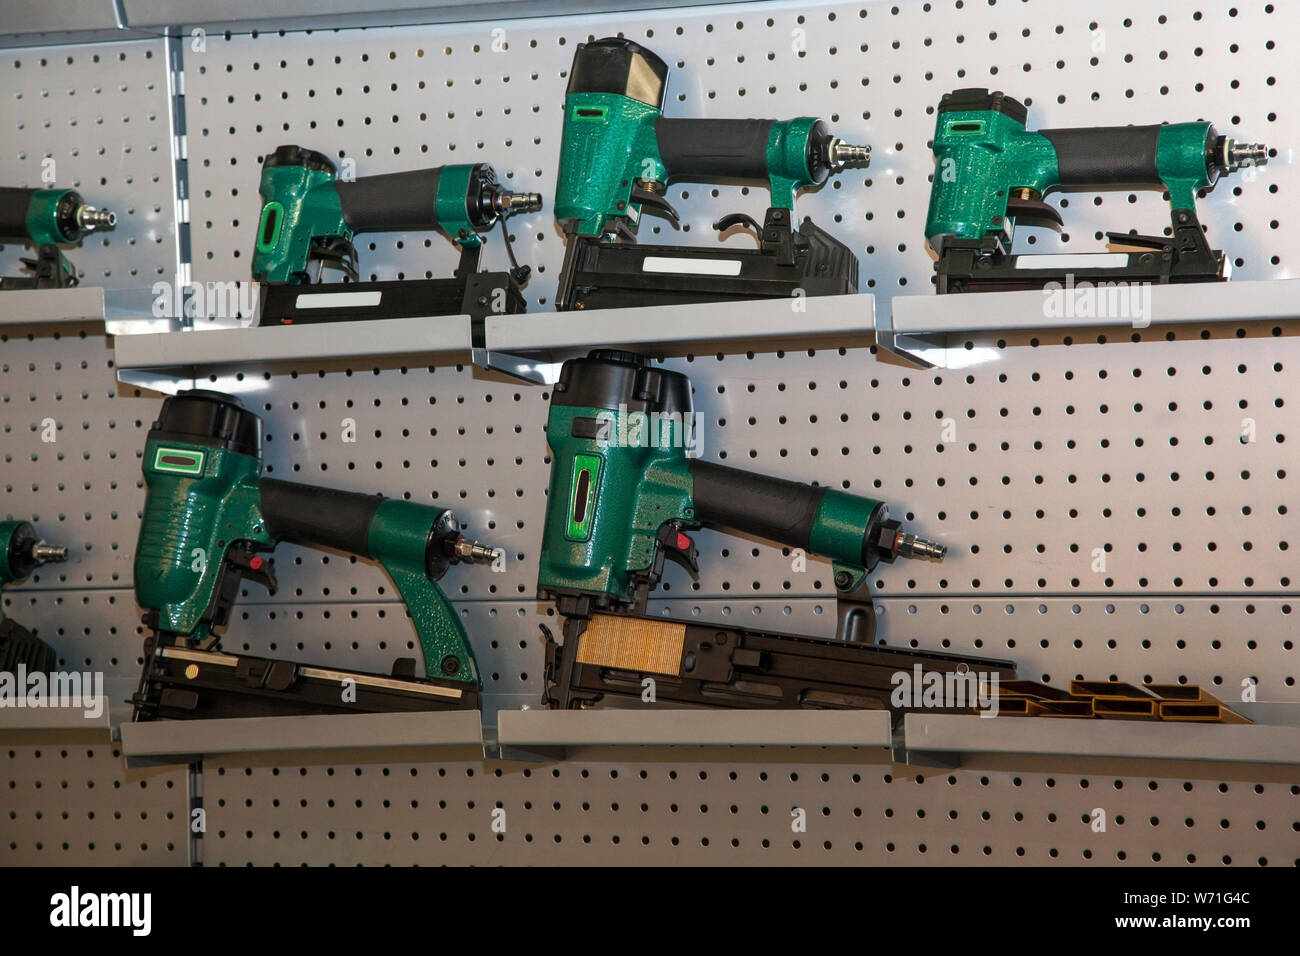 https://c8.alamy.com/comp/W71G4C/set-of-green-power-drills-on-metal-shelves-W71G4C.jpg